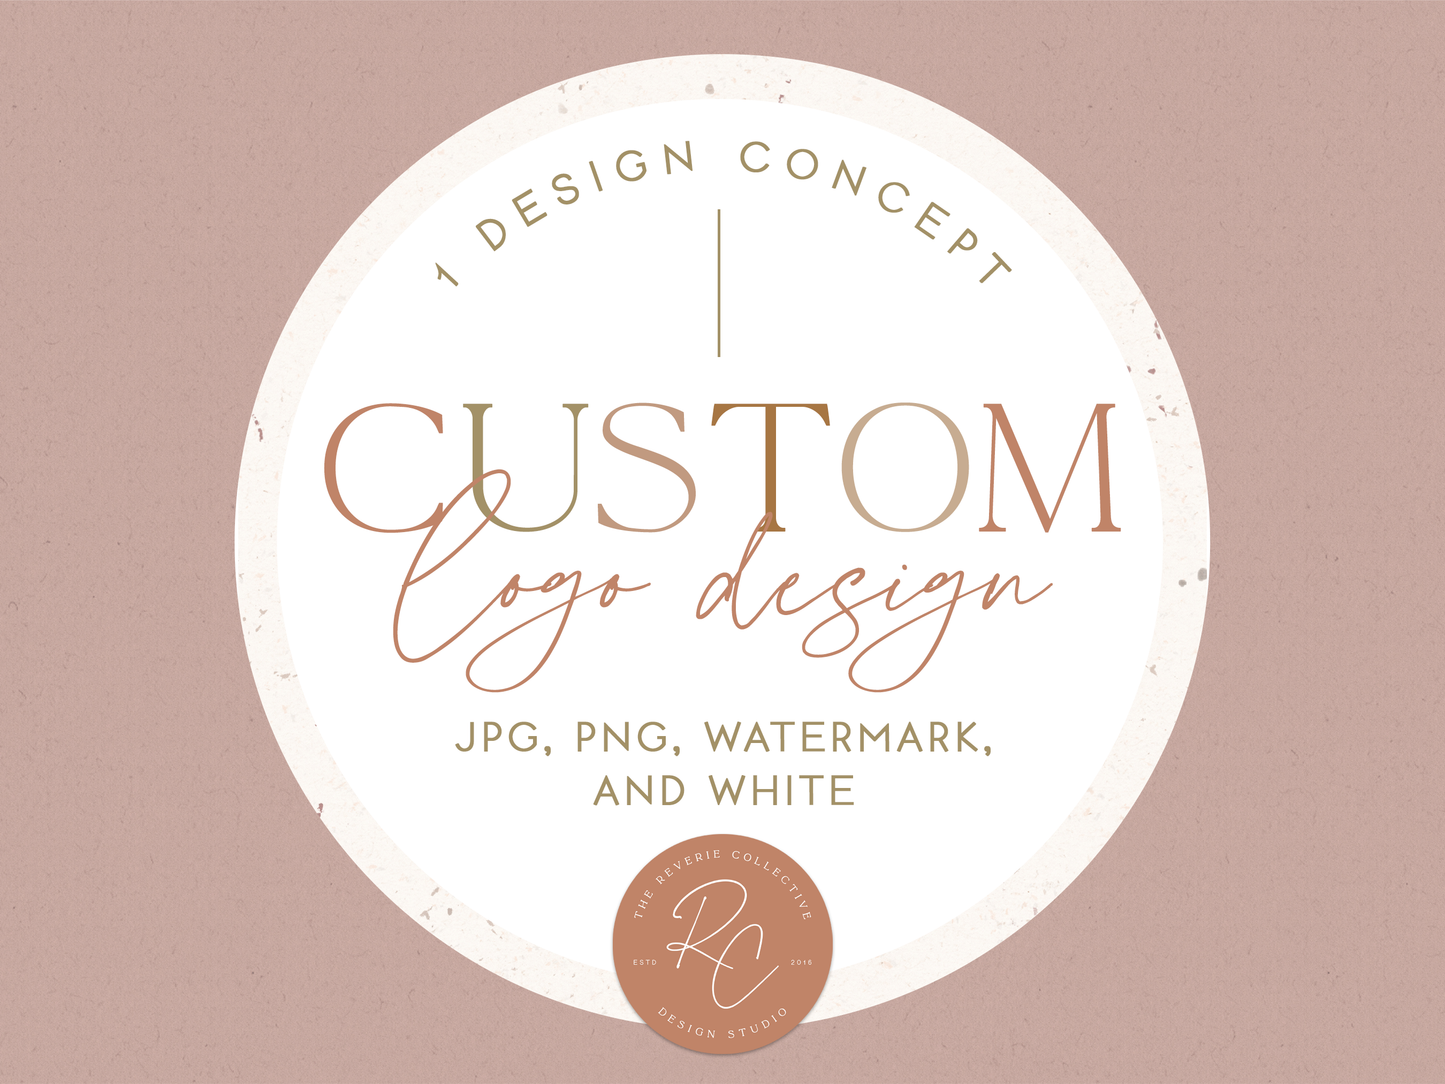 Custom Logo Design | 1 Design Concept